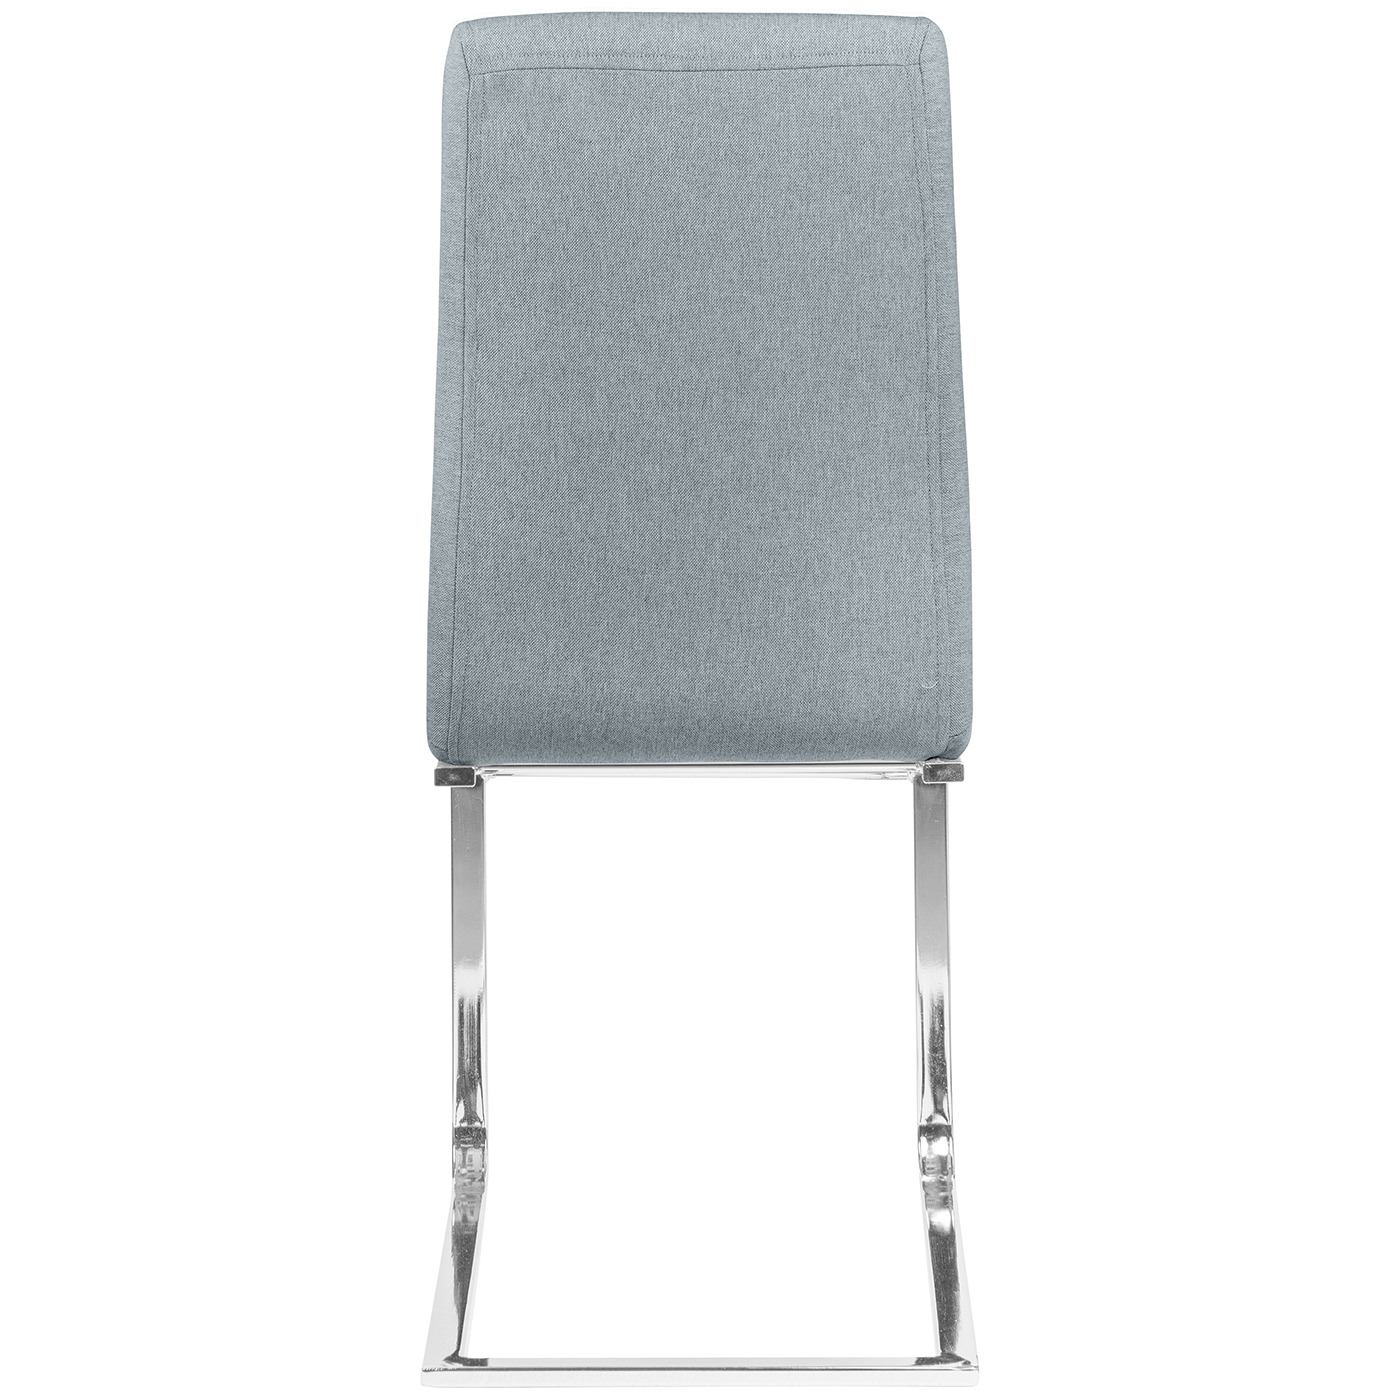 HS 1739 106 12 – Maddox Swing Chair Silver Fabric (4)